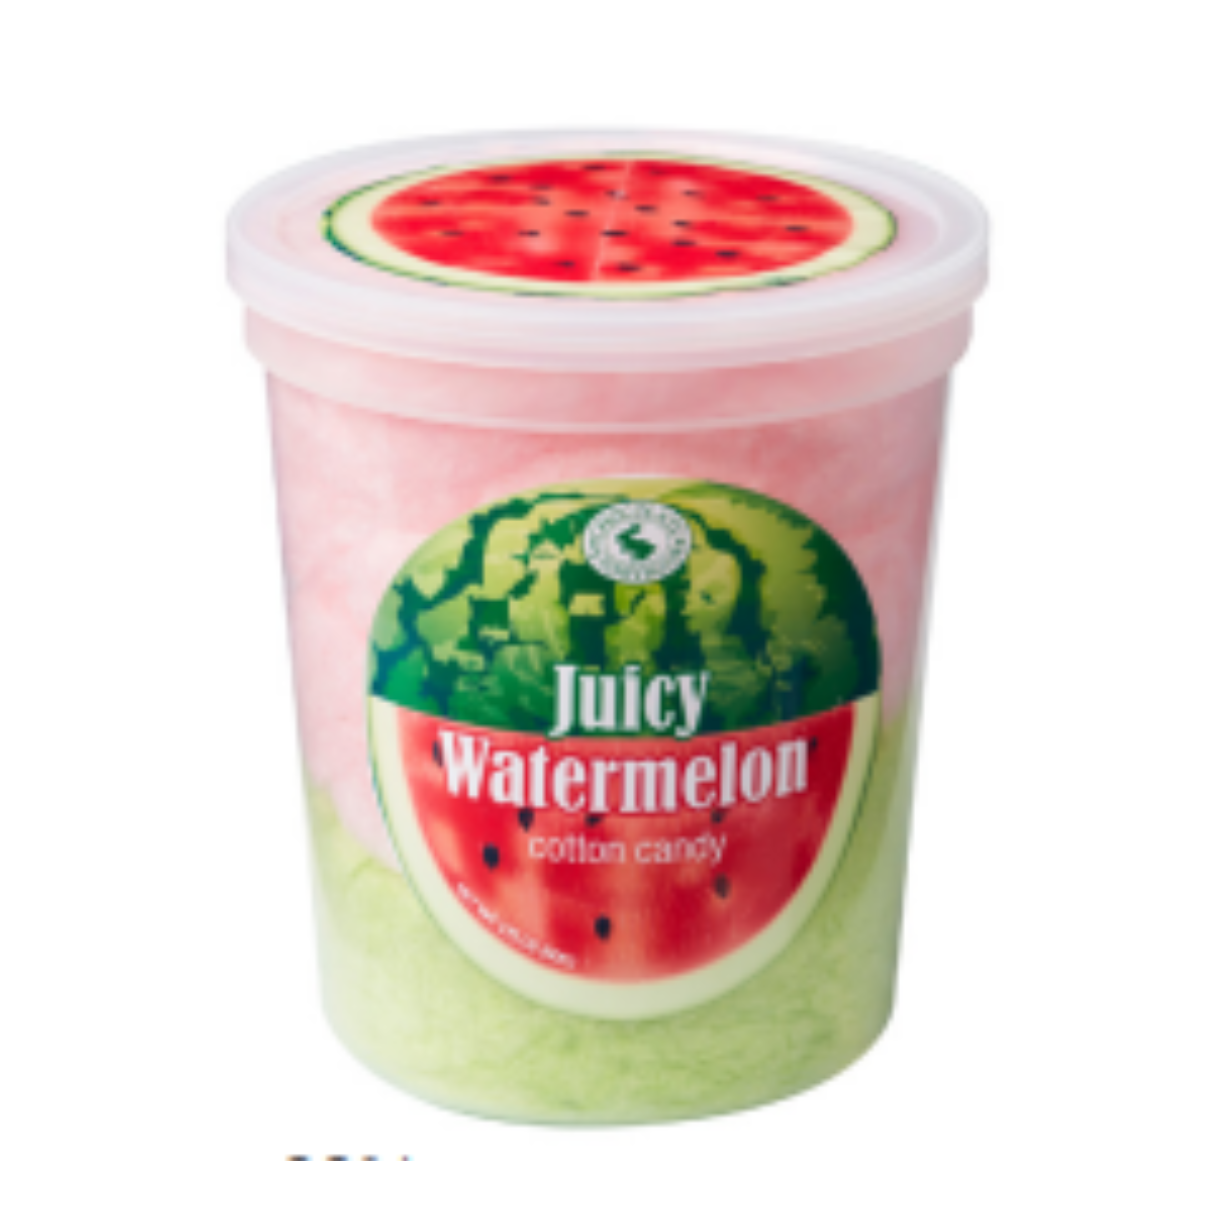 Juicy Watermelon Cotton Candy 1.75oz - 12ct